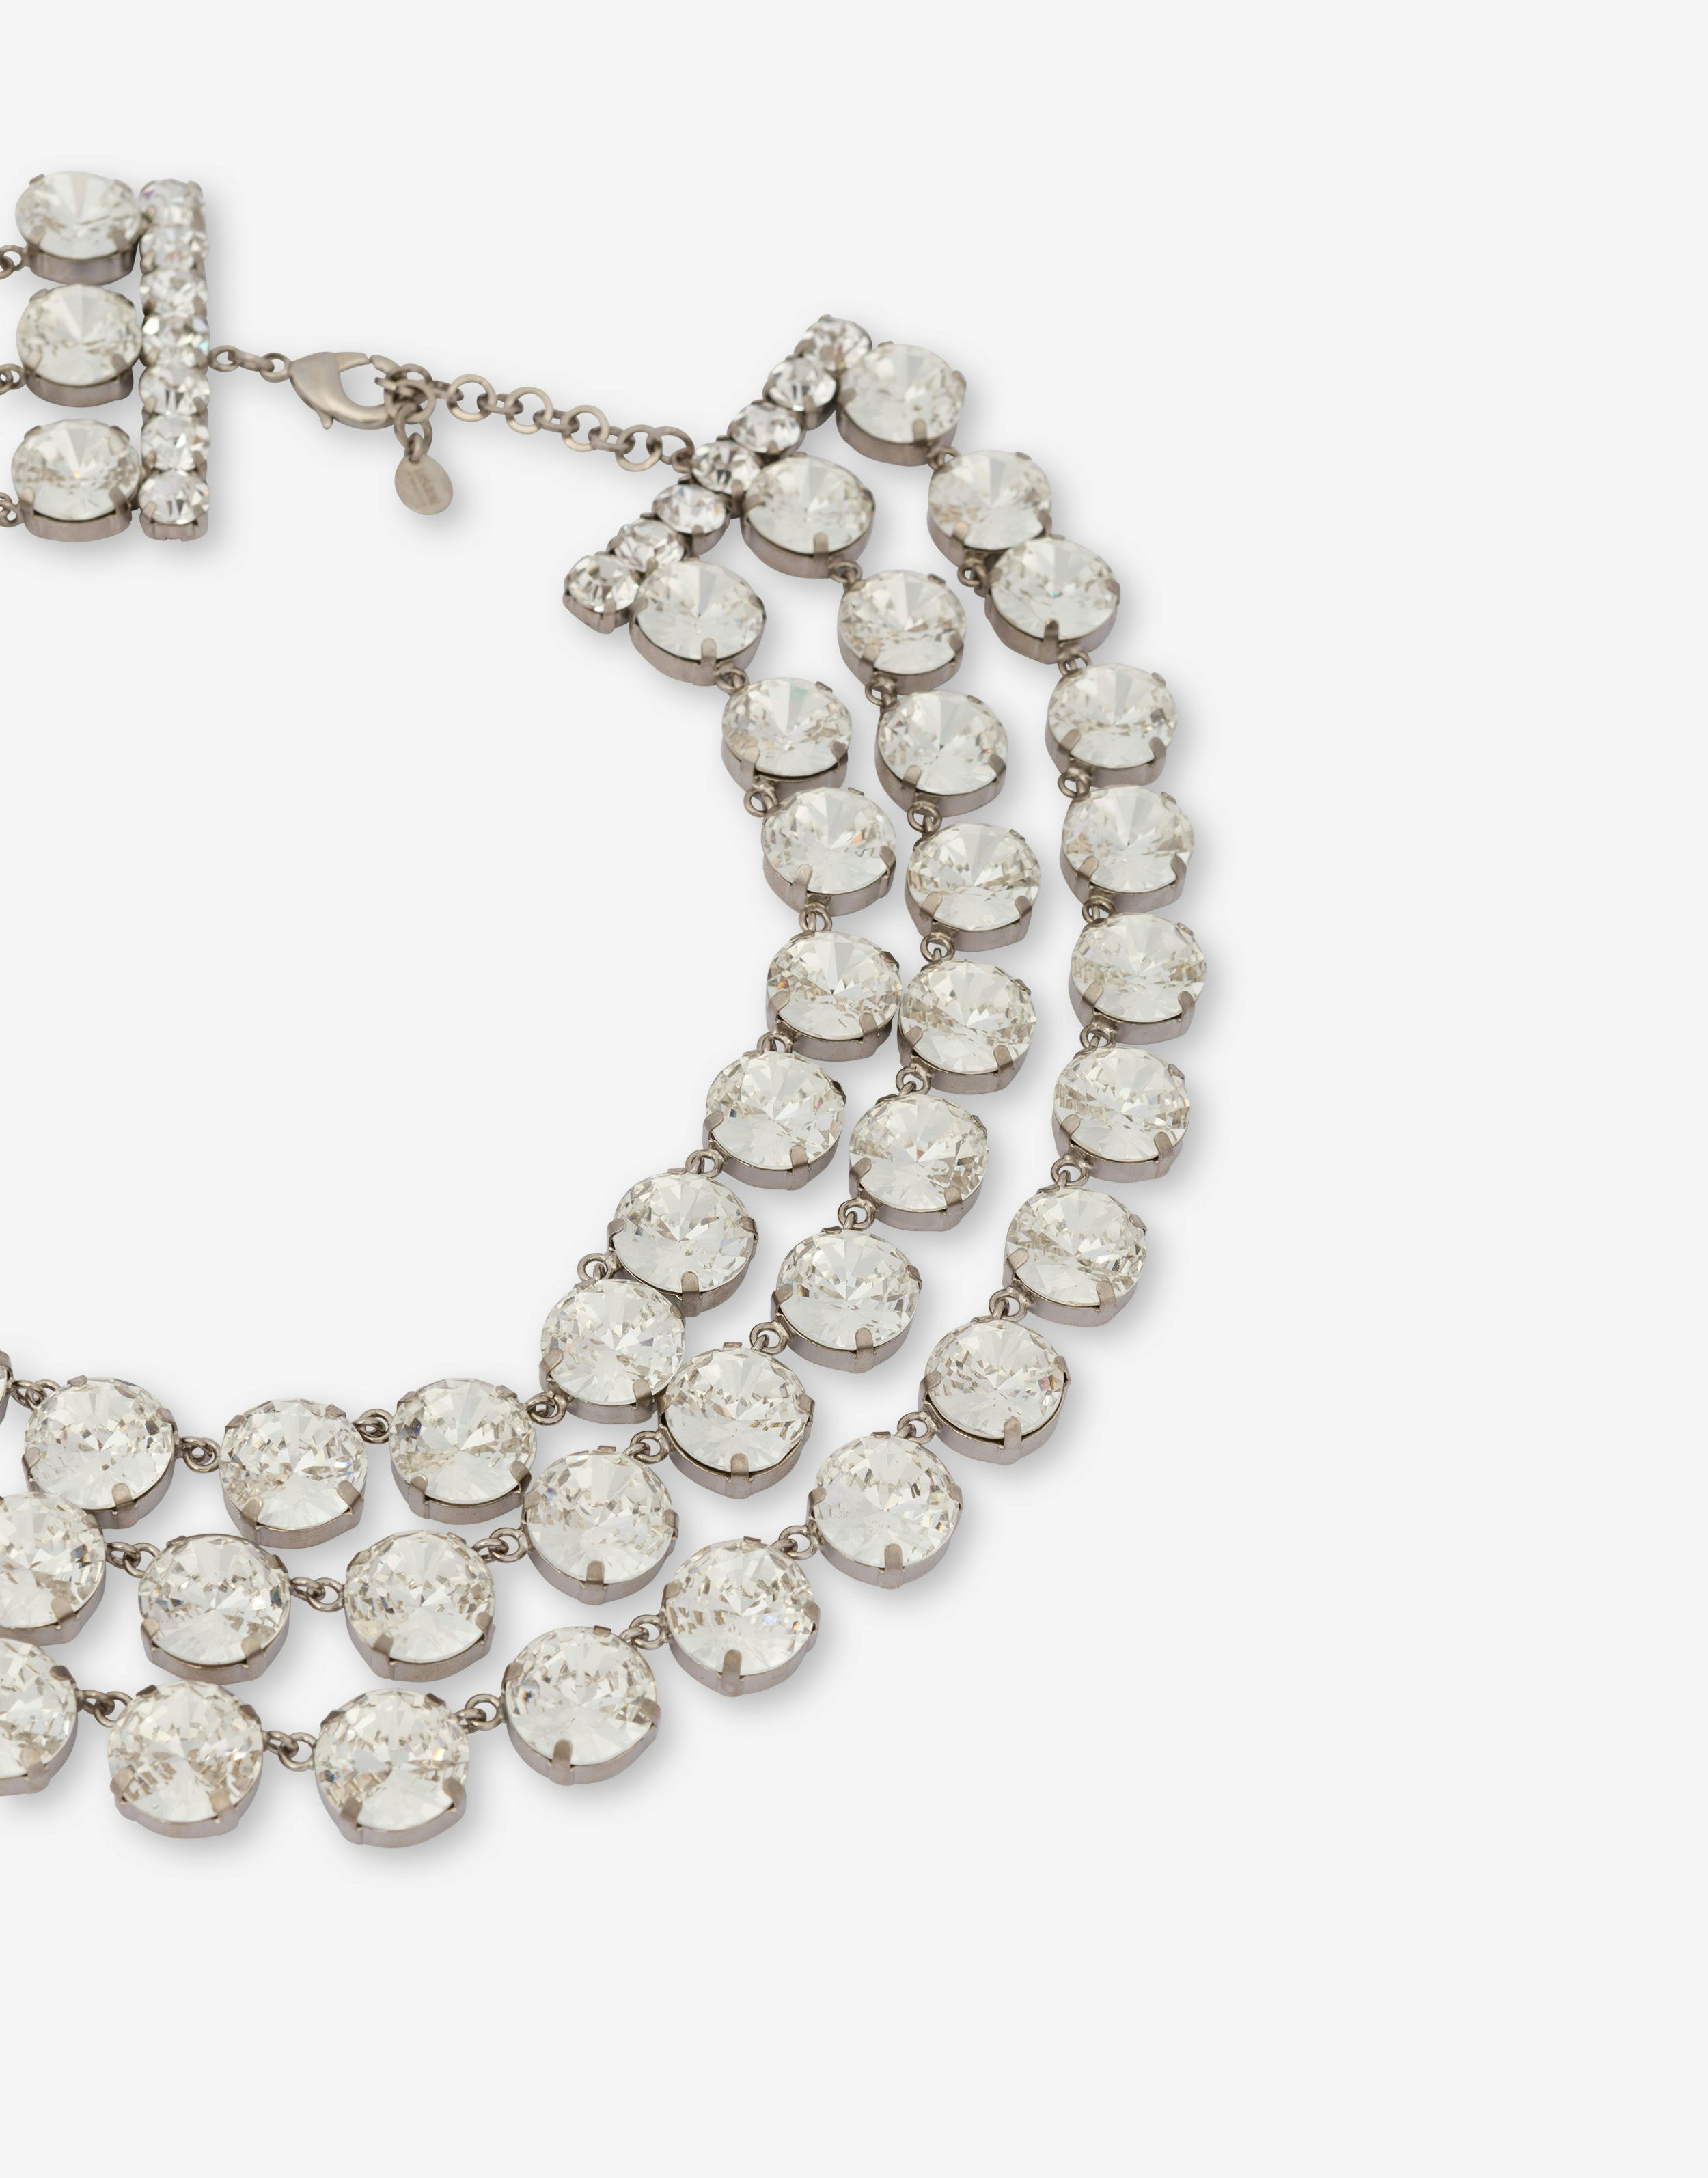 Necklace with round jewel stones